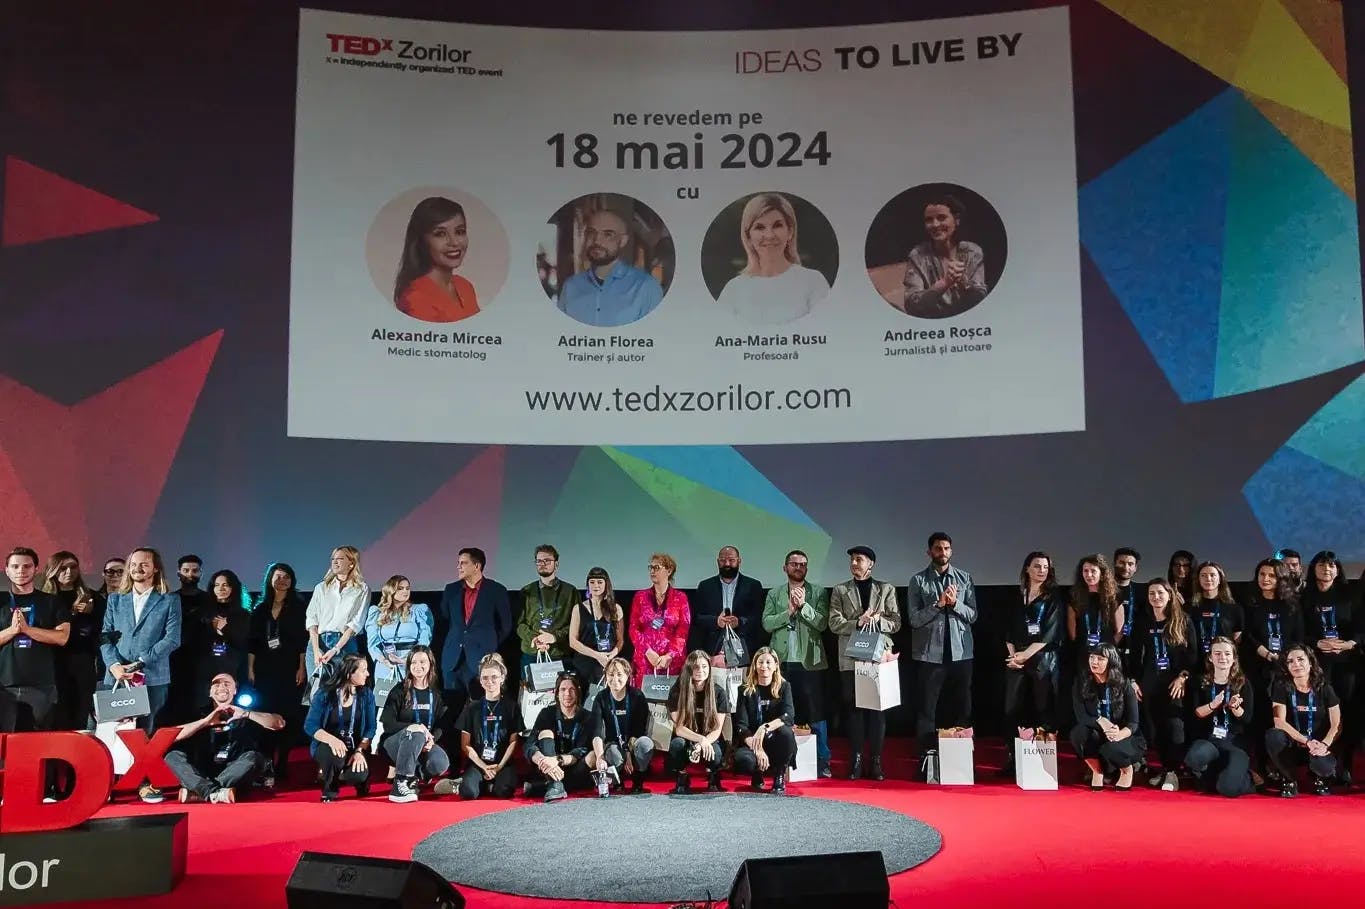 TEDxZorilorSalon - Ideas to live by